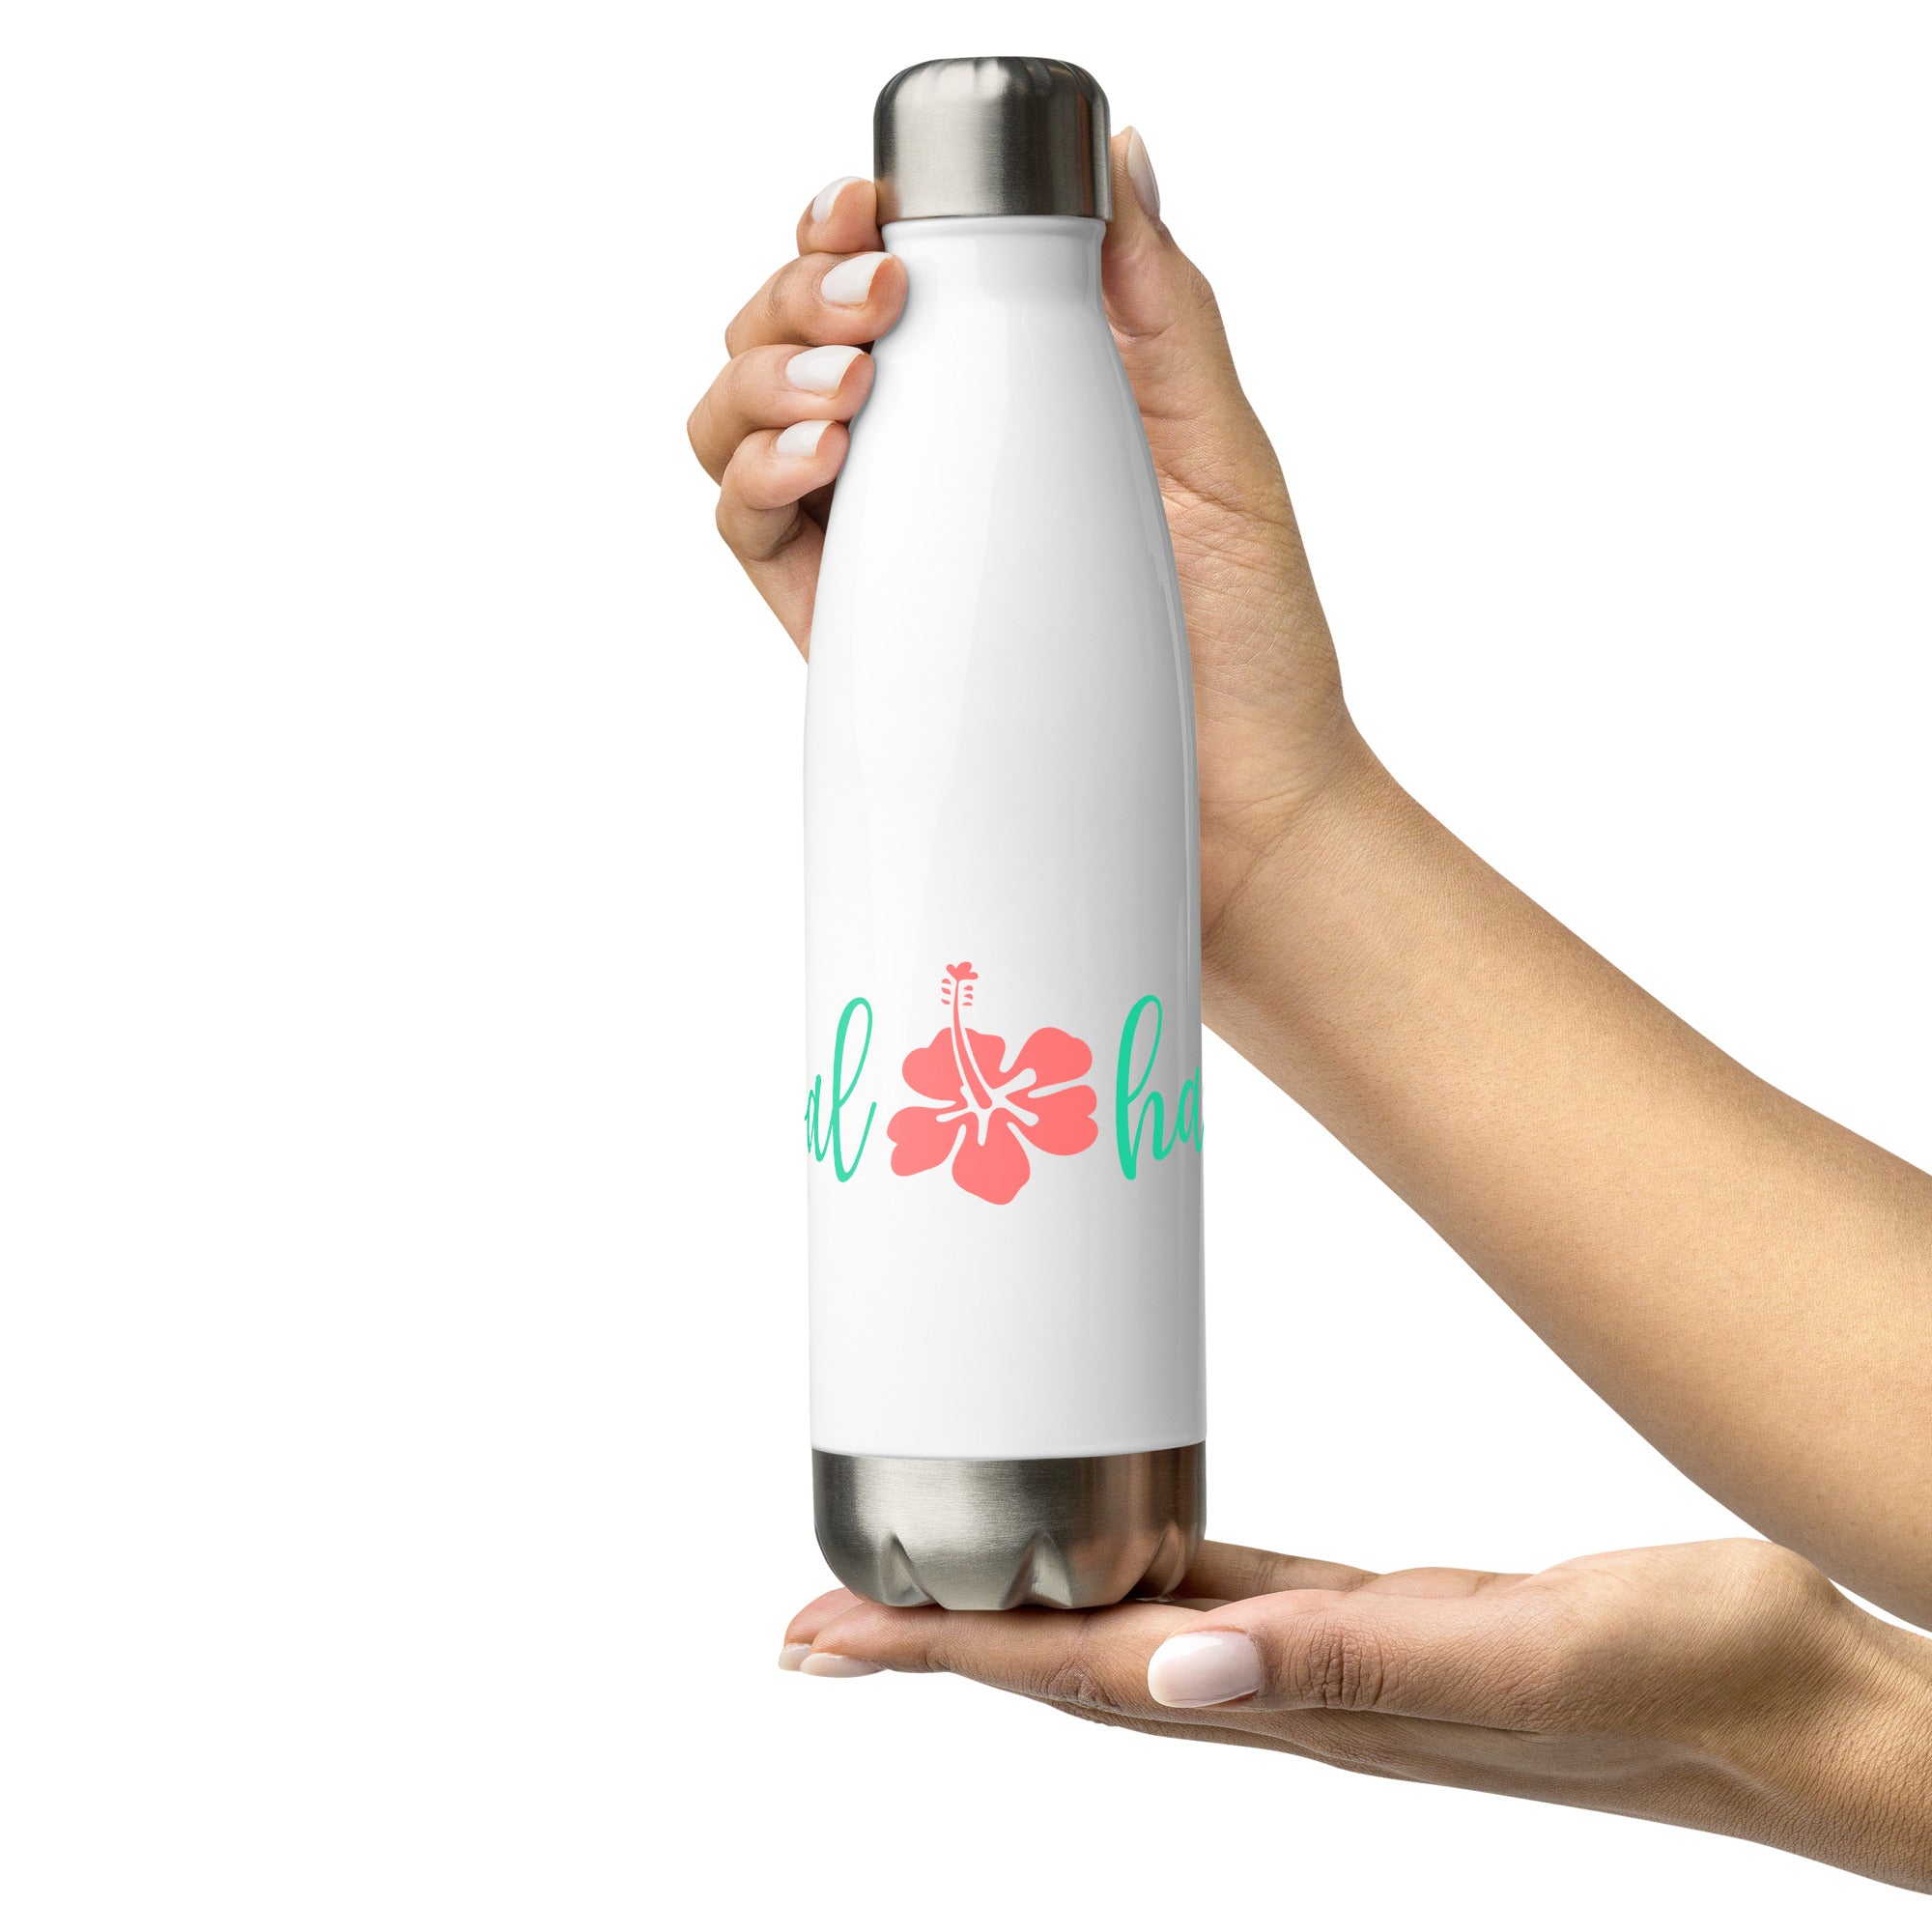 Aloha - Stainless Steel Water Bottle